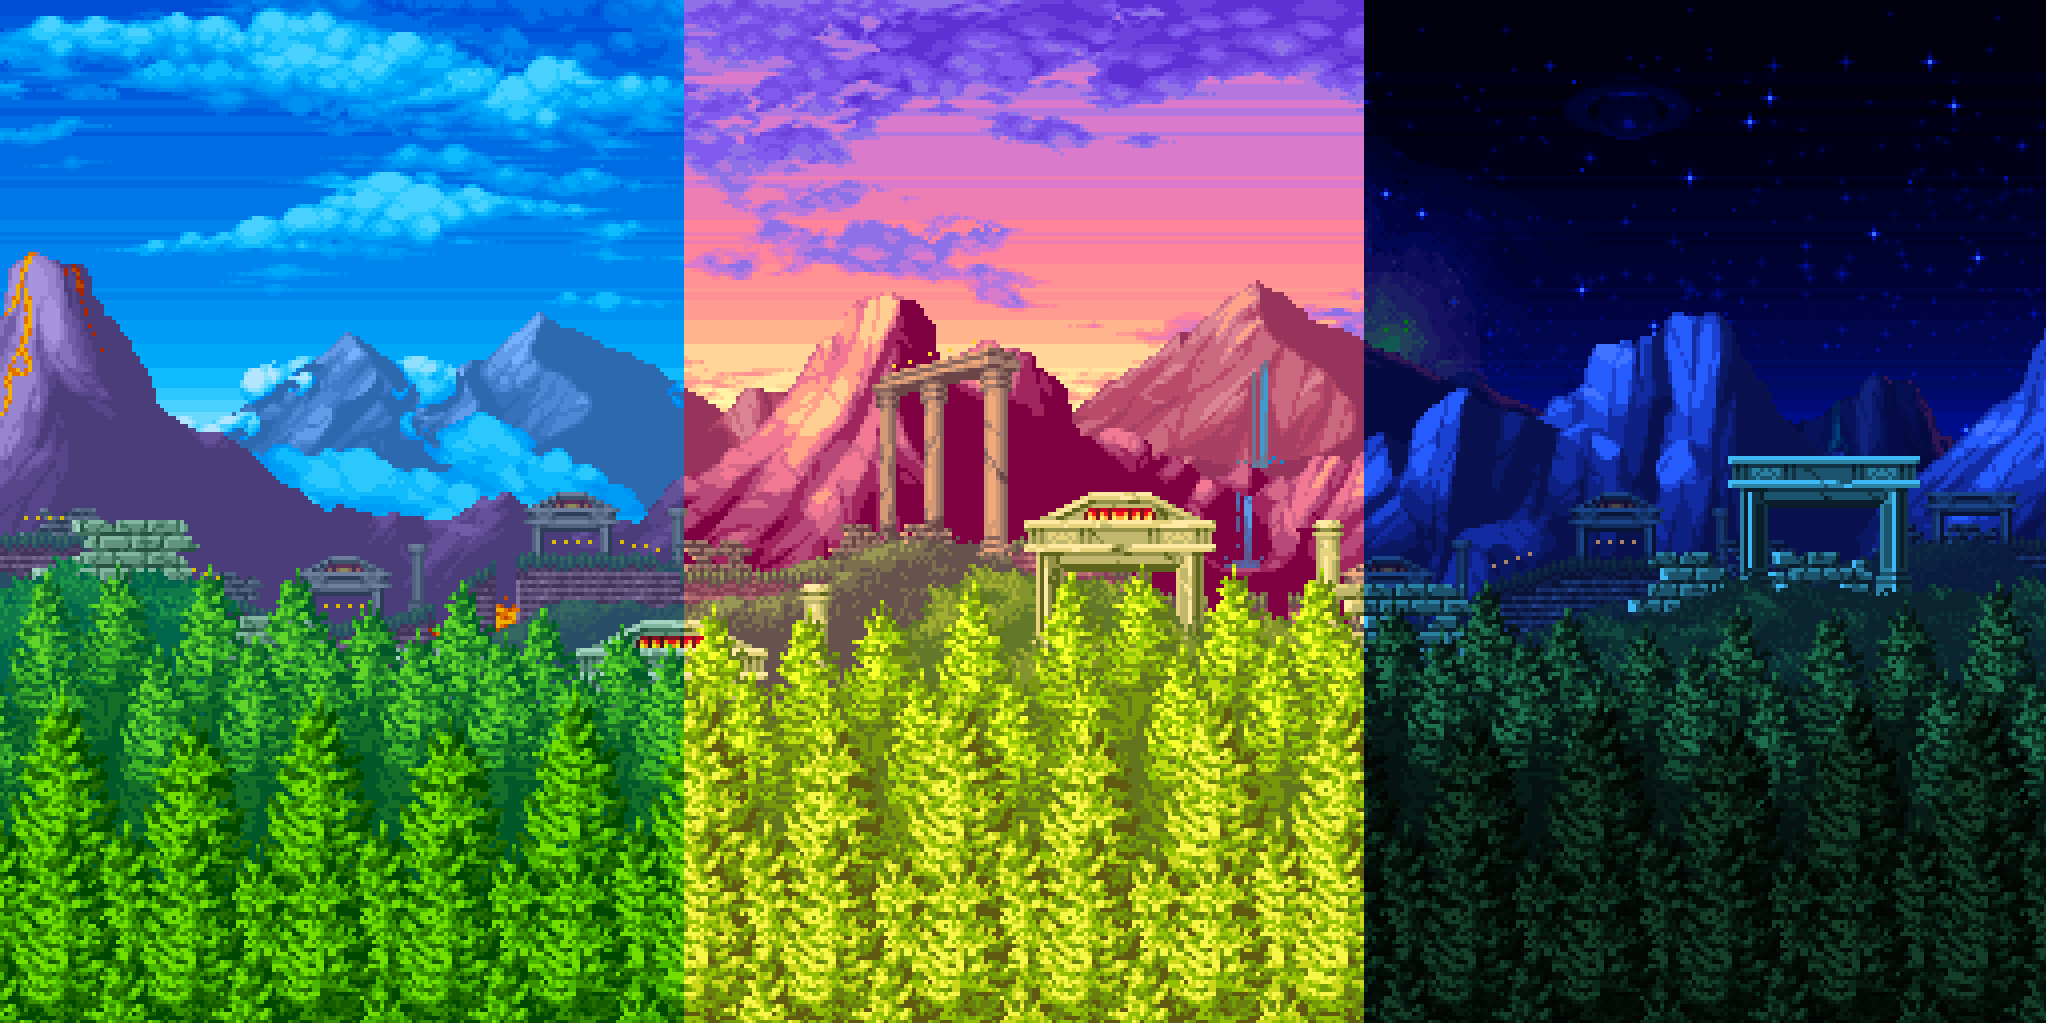 Sonic Studio (fan game) on X: Green Hill's lookin' a lot more